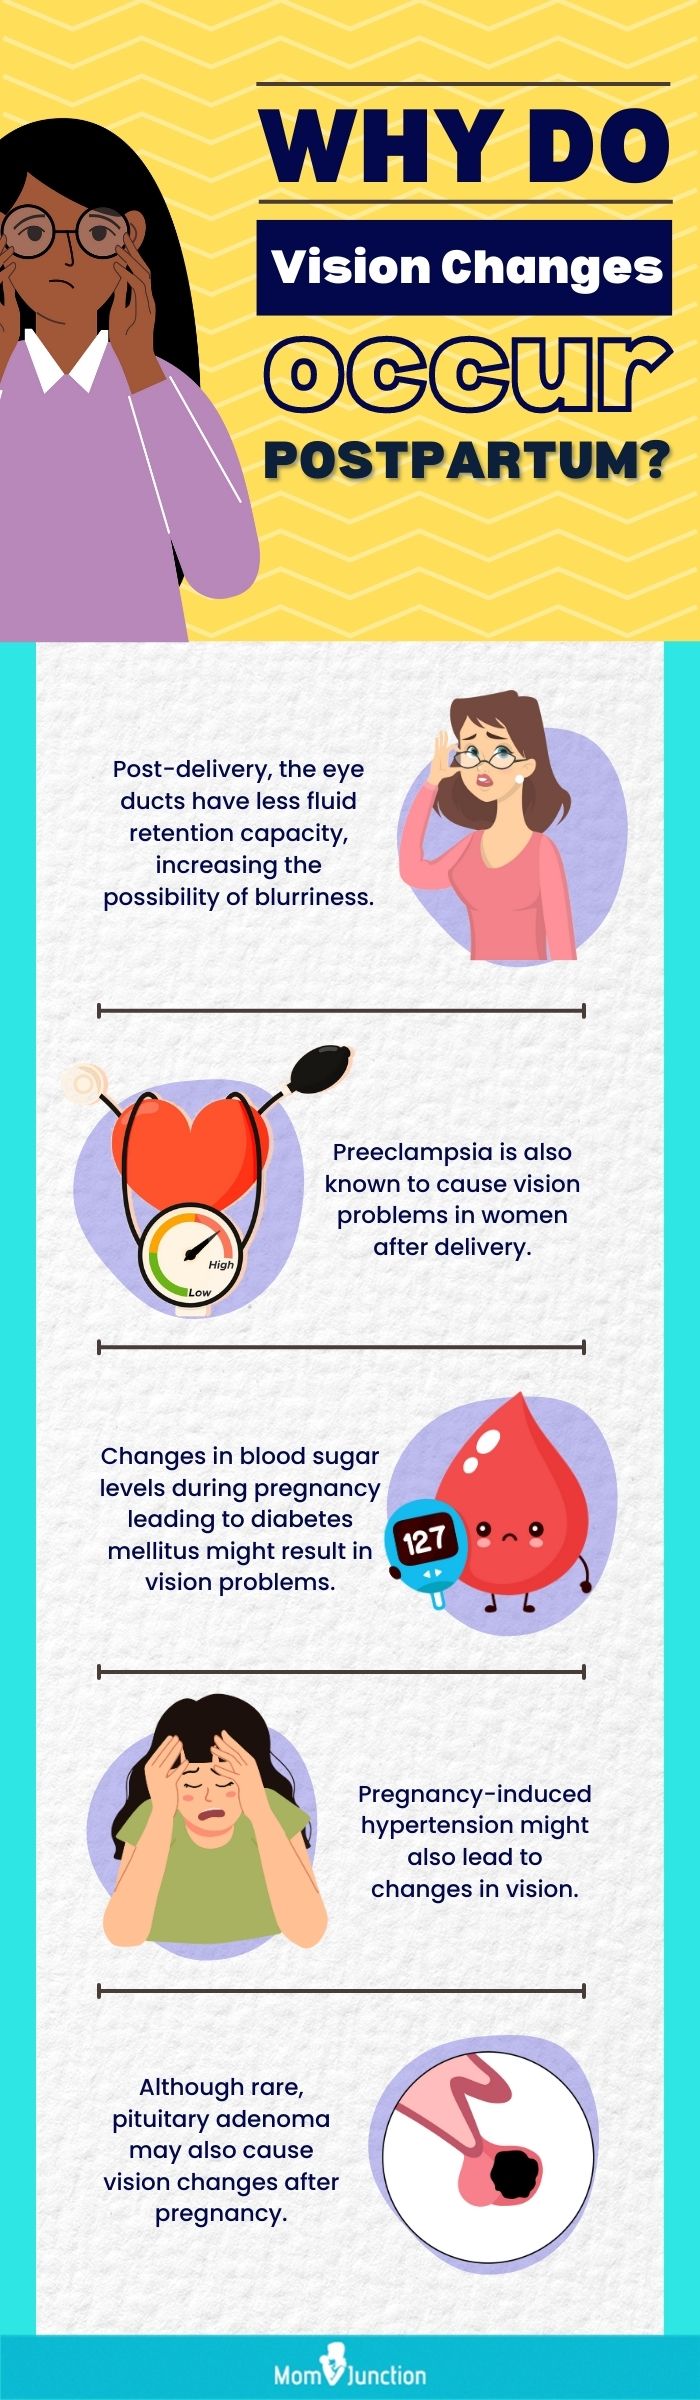 Differential Diagnosis of Vertigo in Pregnancy and Postpartum